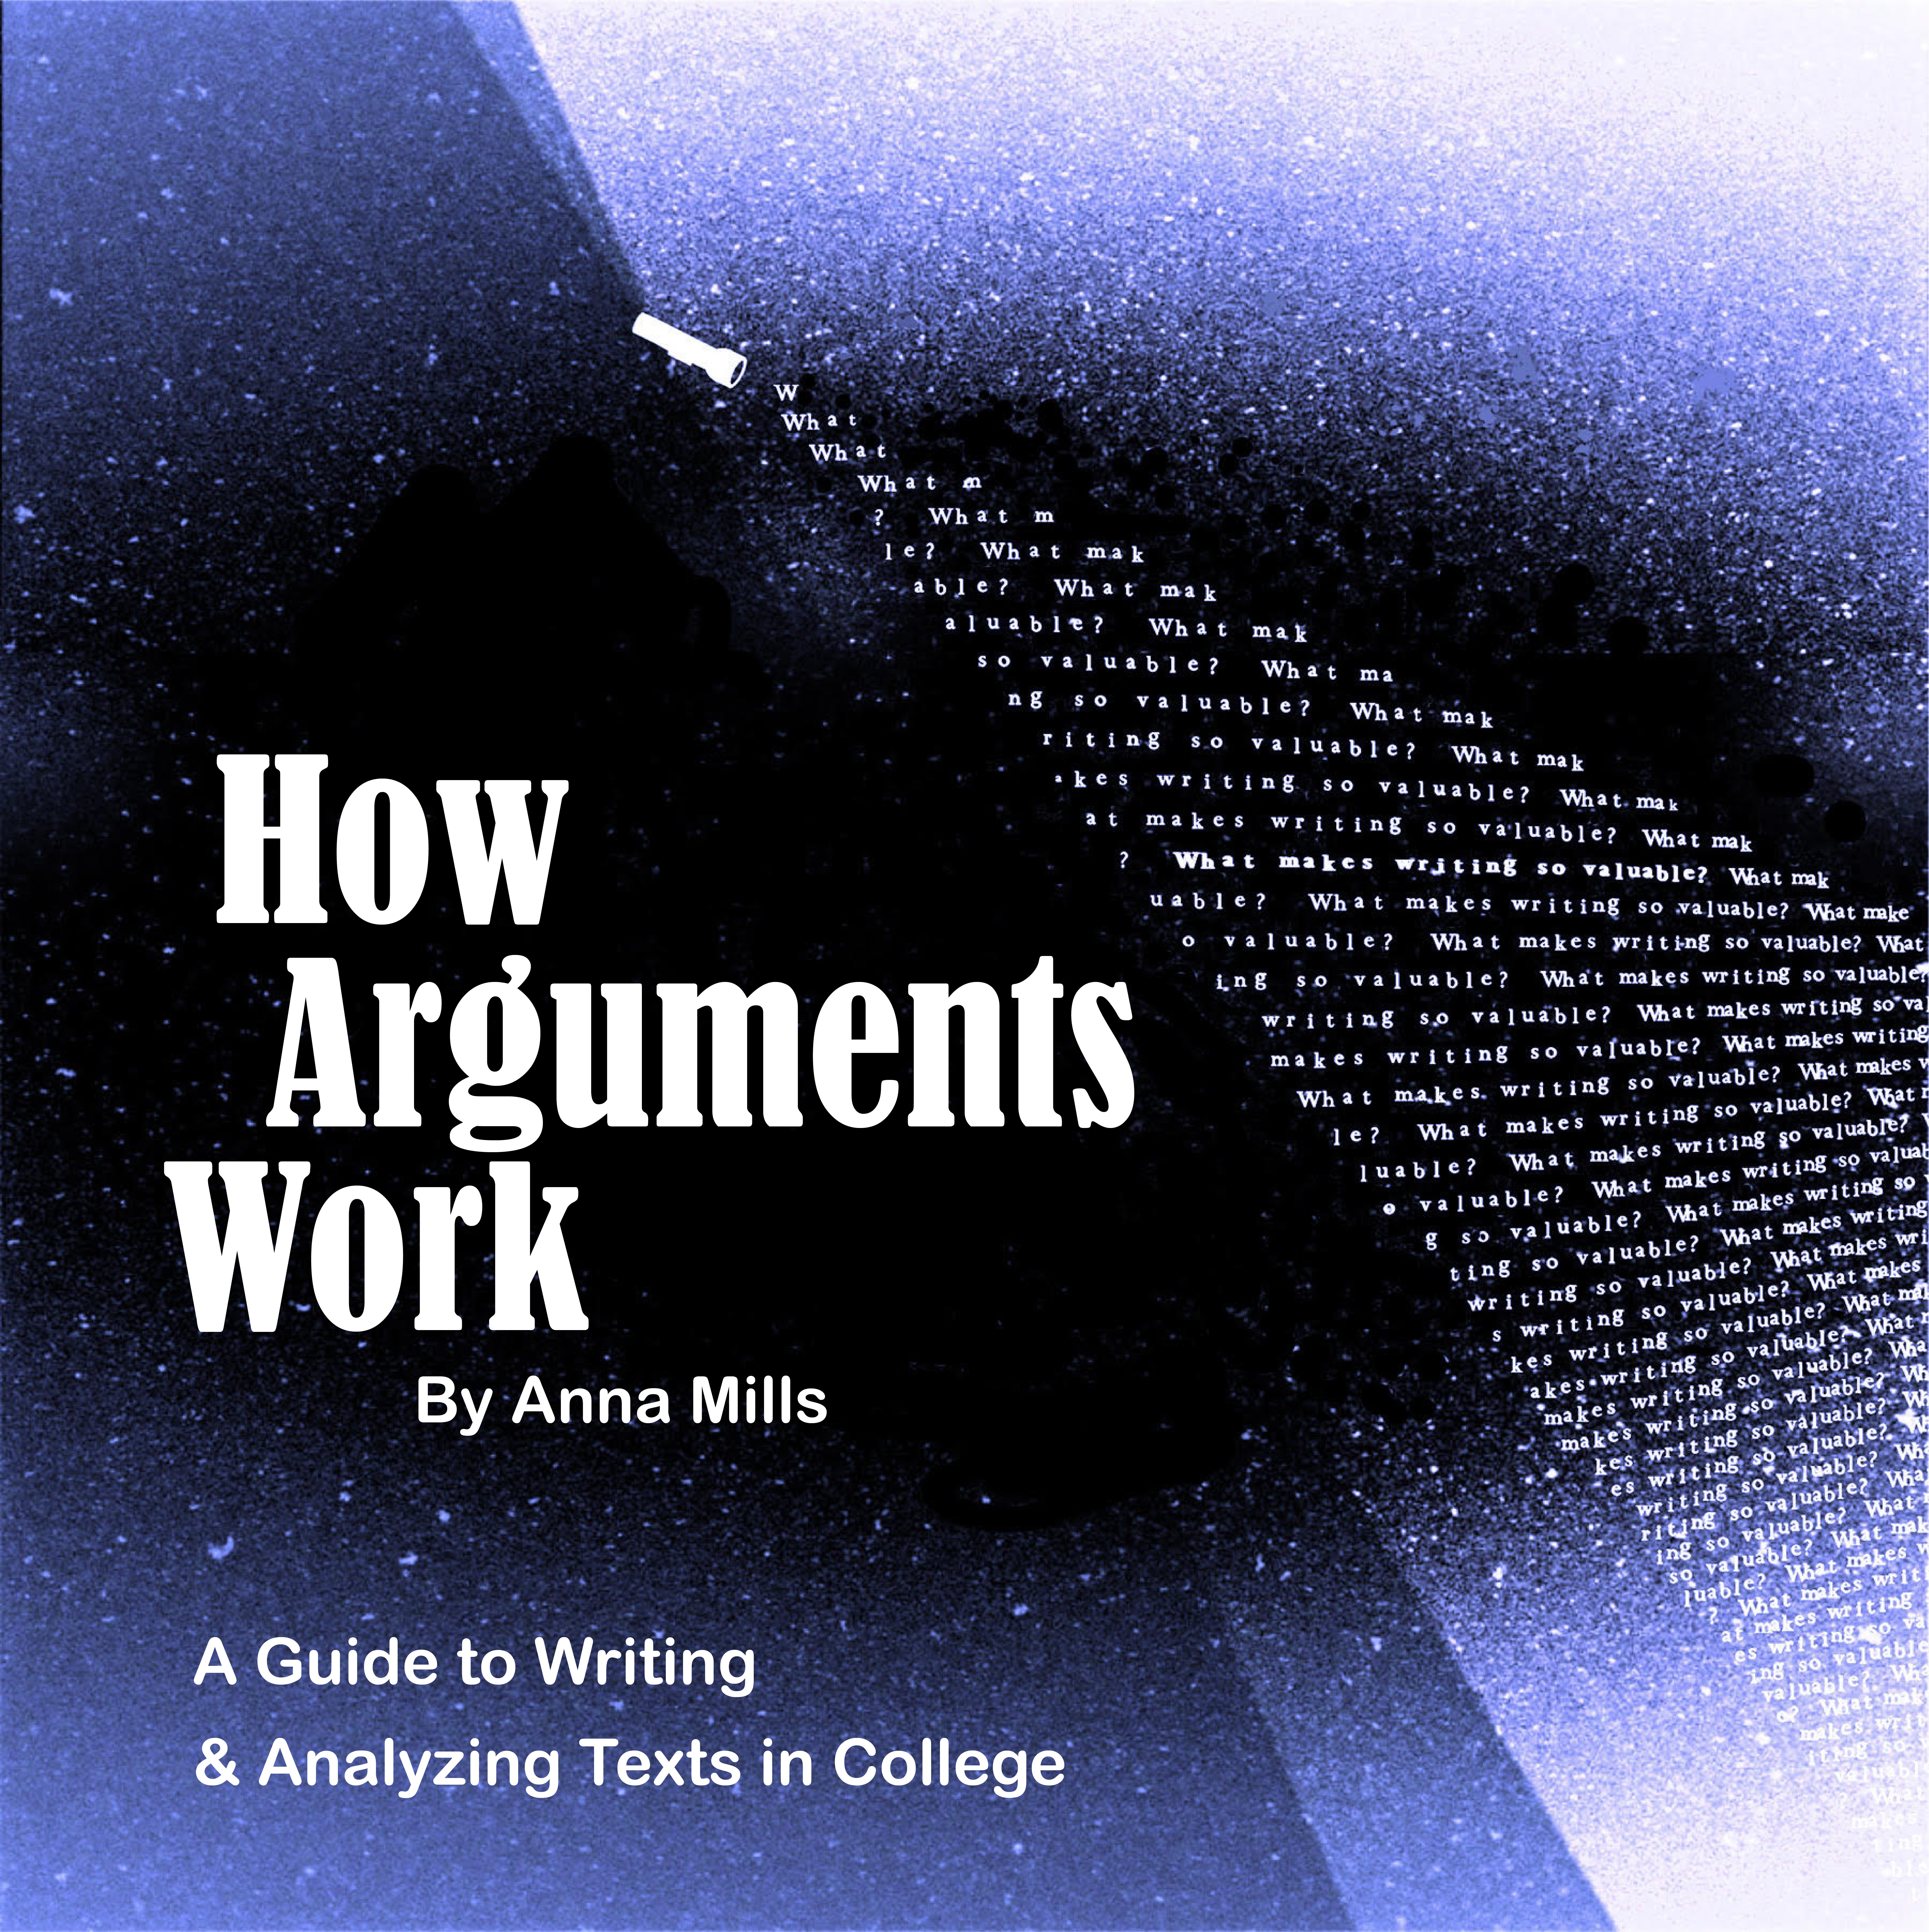 Le titre « How Arguments Work : A Guide to Writing and Analyzing Texts in College by Anna Mills » sur fond sombre avec une lampe de poche illuminant les mots et les questions